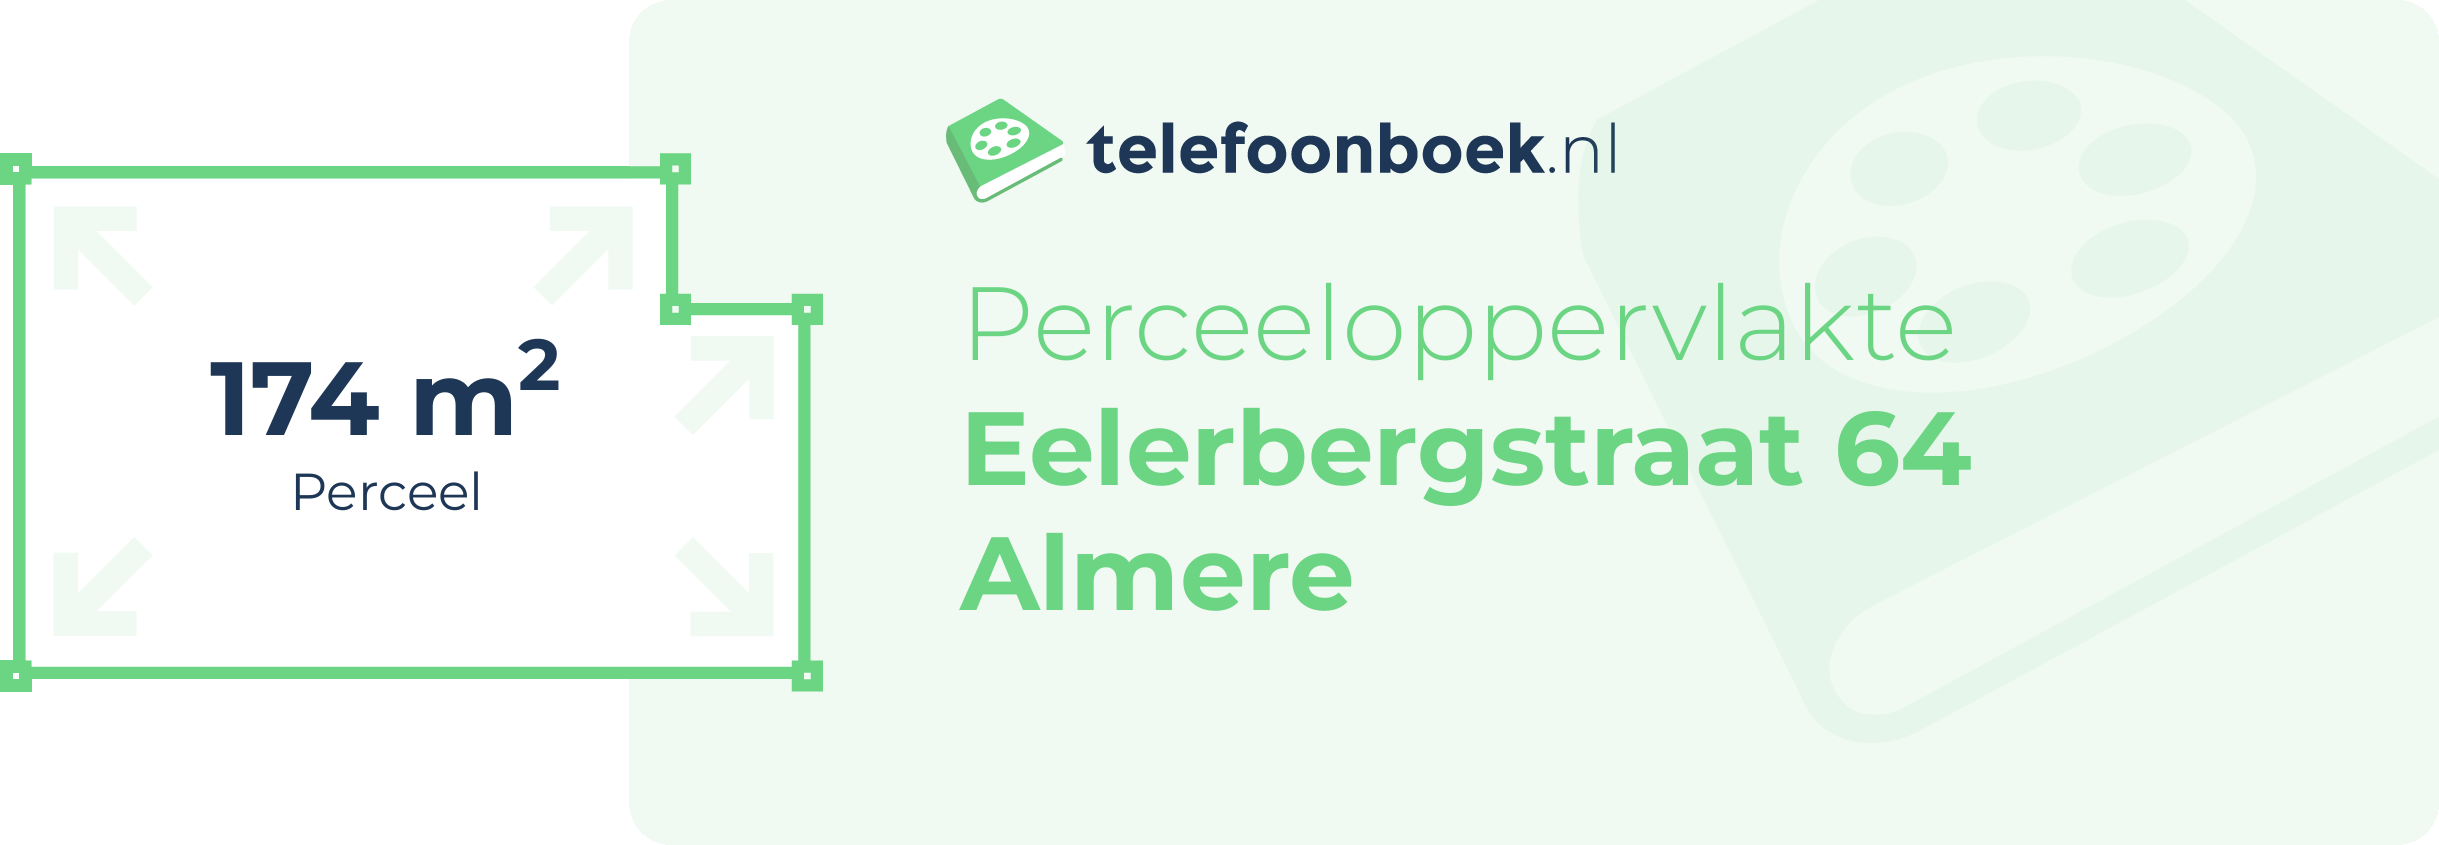 Perceeloppervlakte Eelerbergstraat 64 Almere